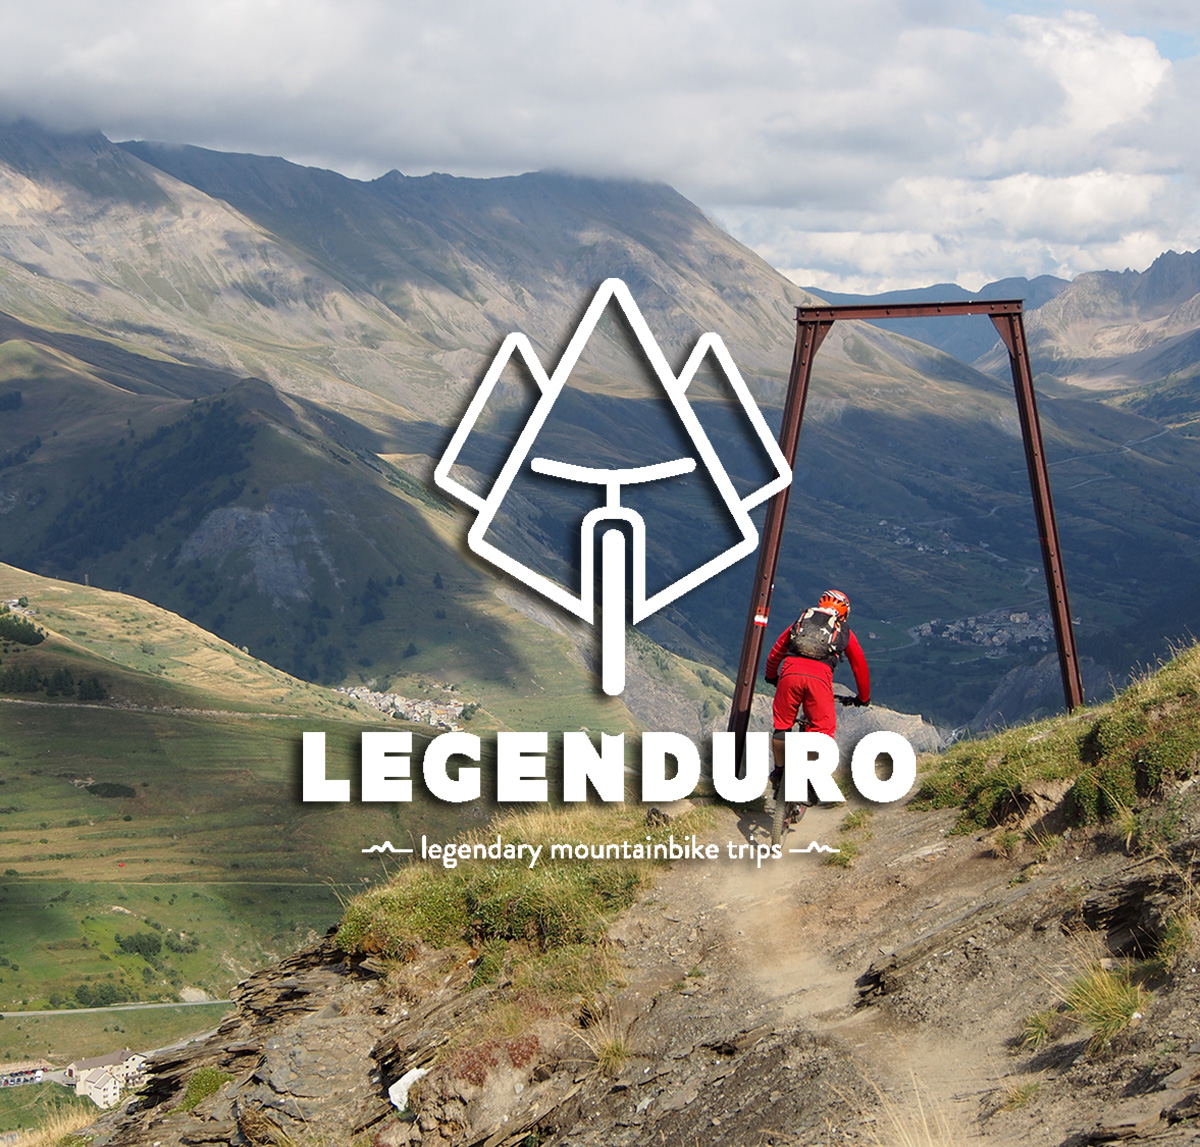 Legenduro : Accompanied mountain bike trips on request